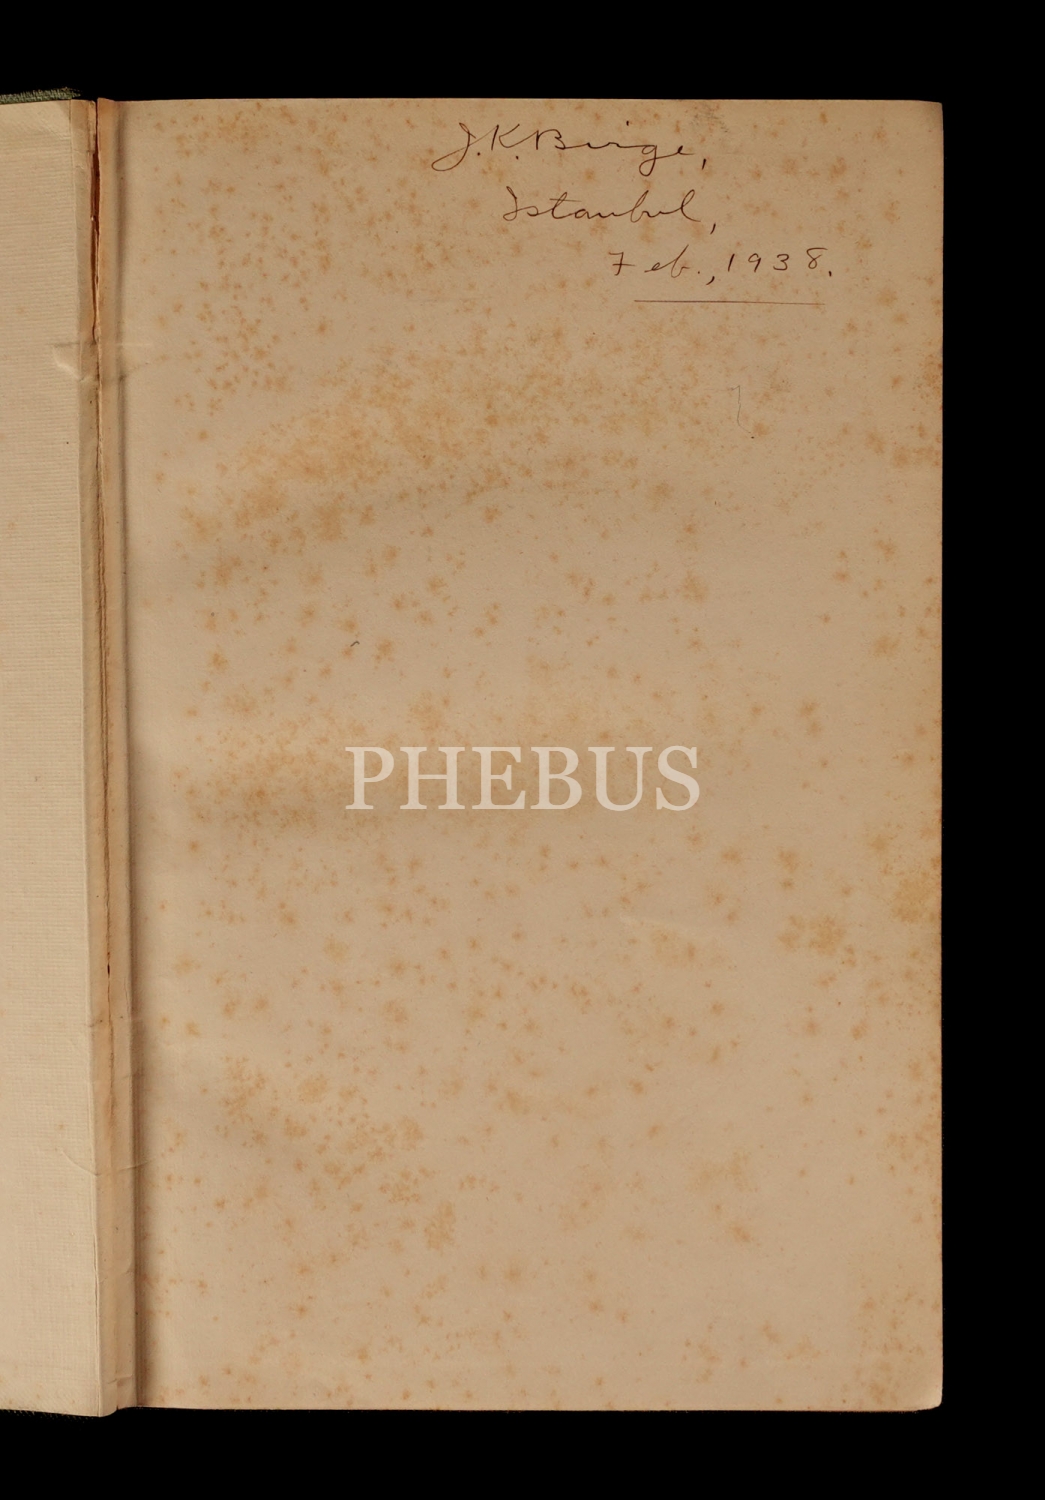 THE BEKTASHI ORDER OF DERVISHES, John Kingsley Birge, 1937, Hartford Seminary Press (Hartford), 291 sayfa, 16x25 cm...